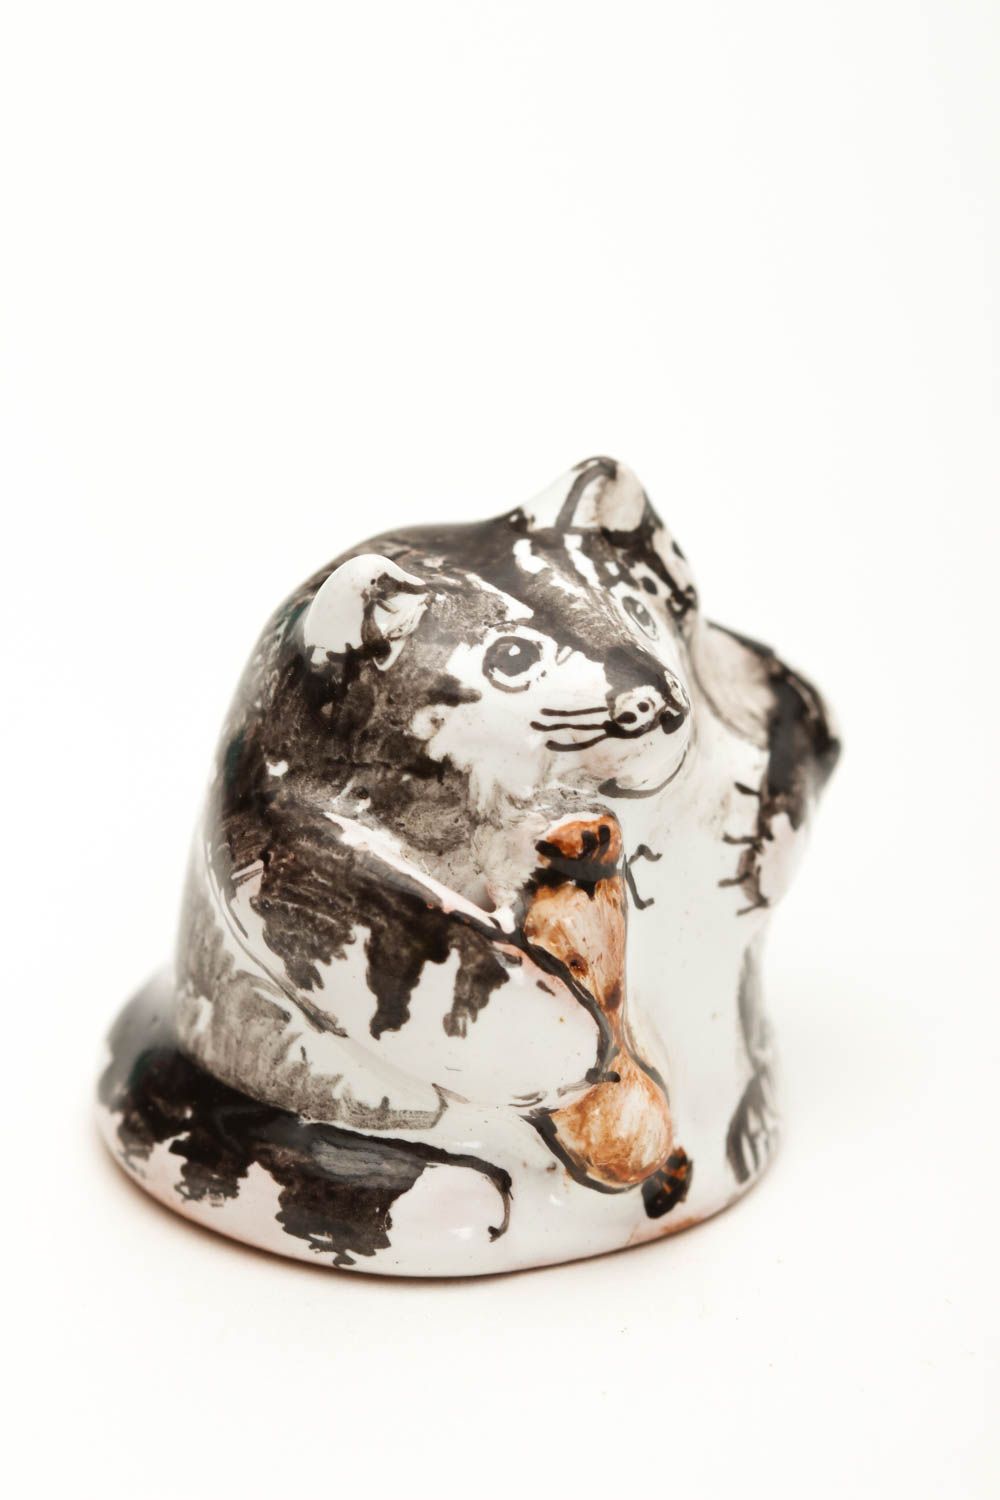 Handmade collectible thimble ceramic decorative use only animal figurine photo 2